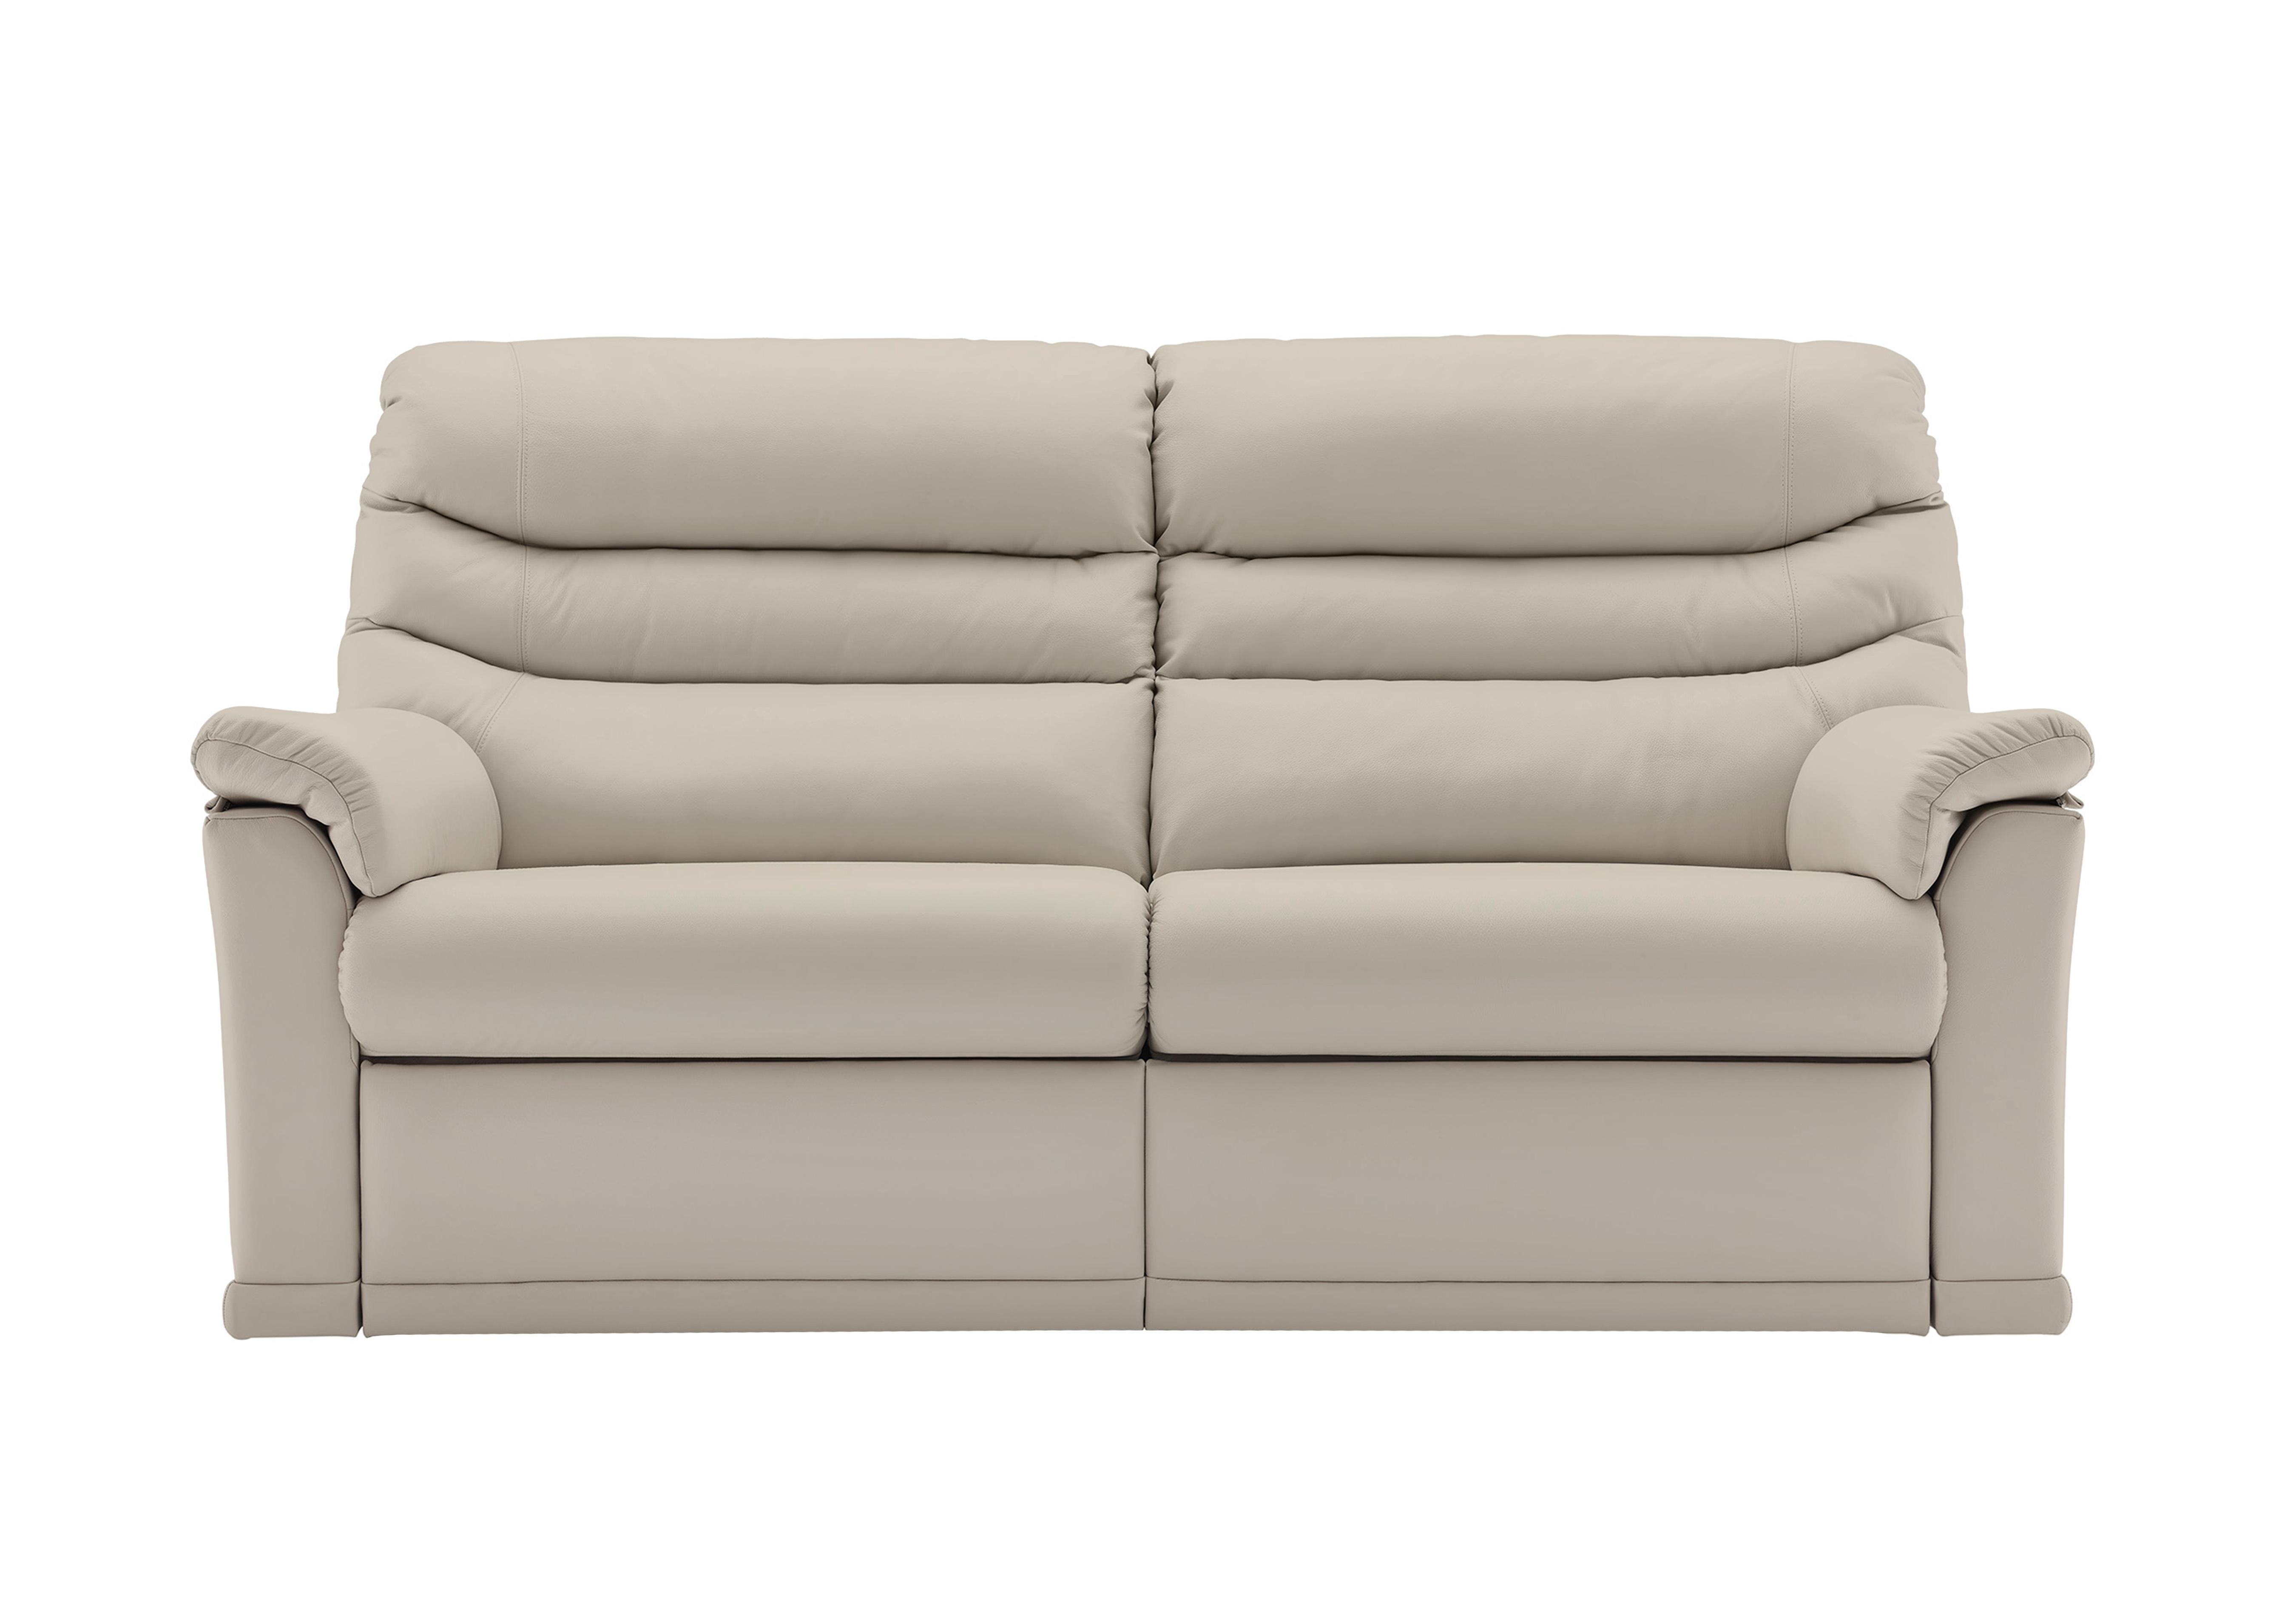 Malvern 2 Cushion 3 Seater Leather Sofa in P219 Capri Putty on Furniture Village